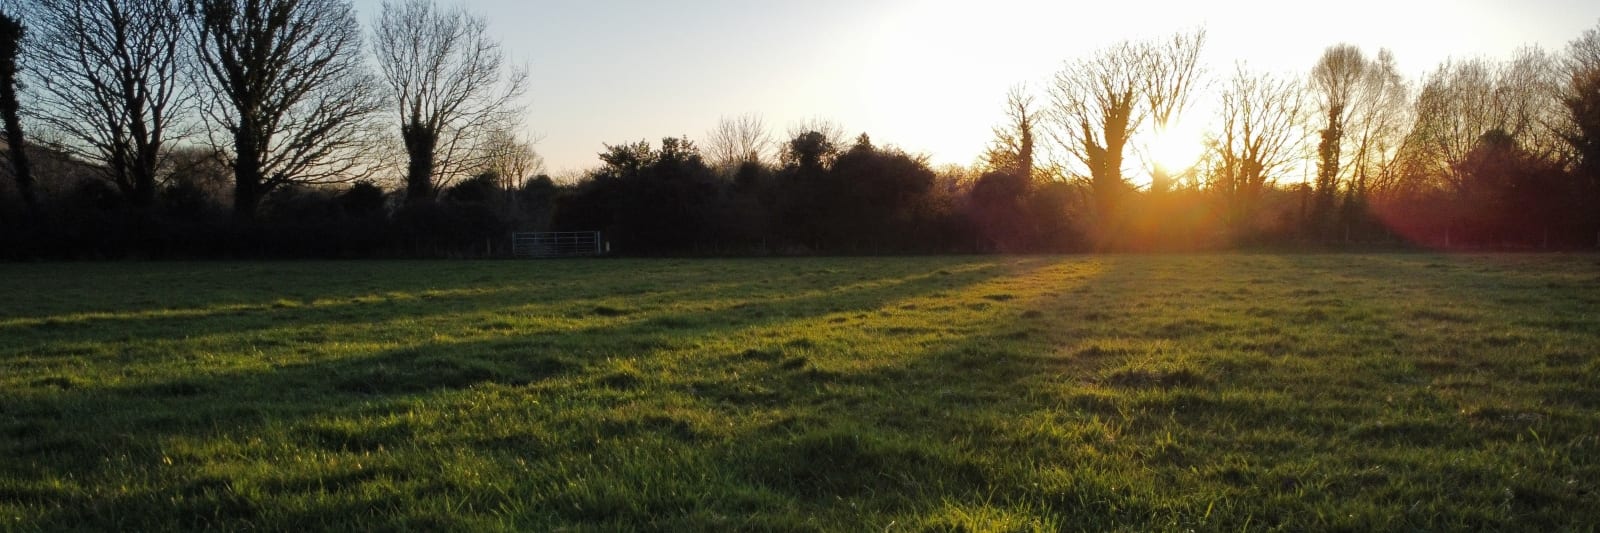 Sunlight over field in Ireland